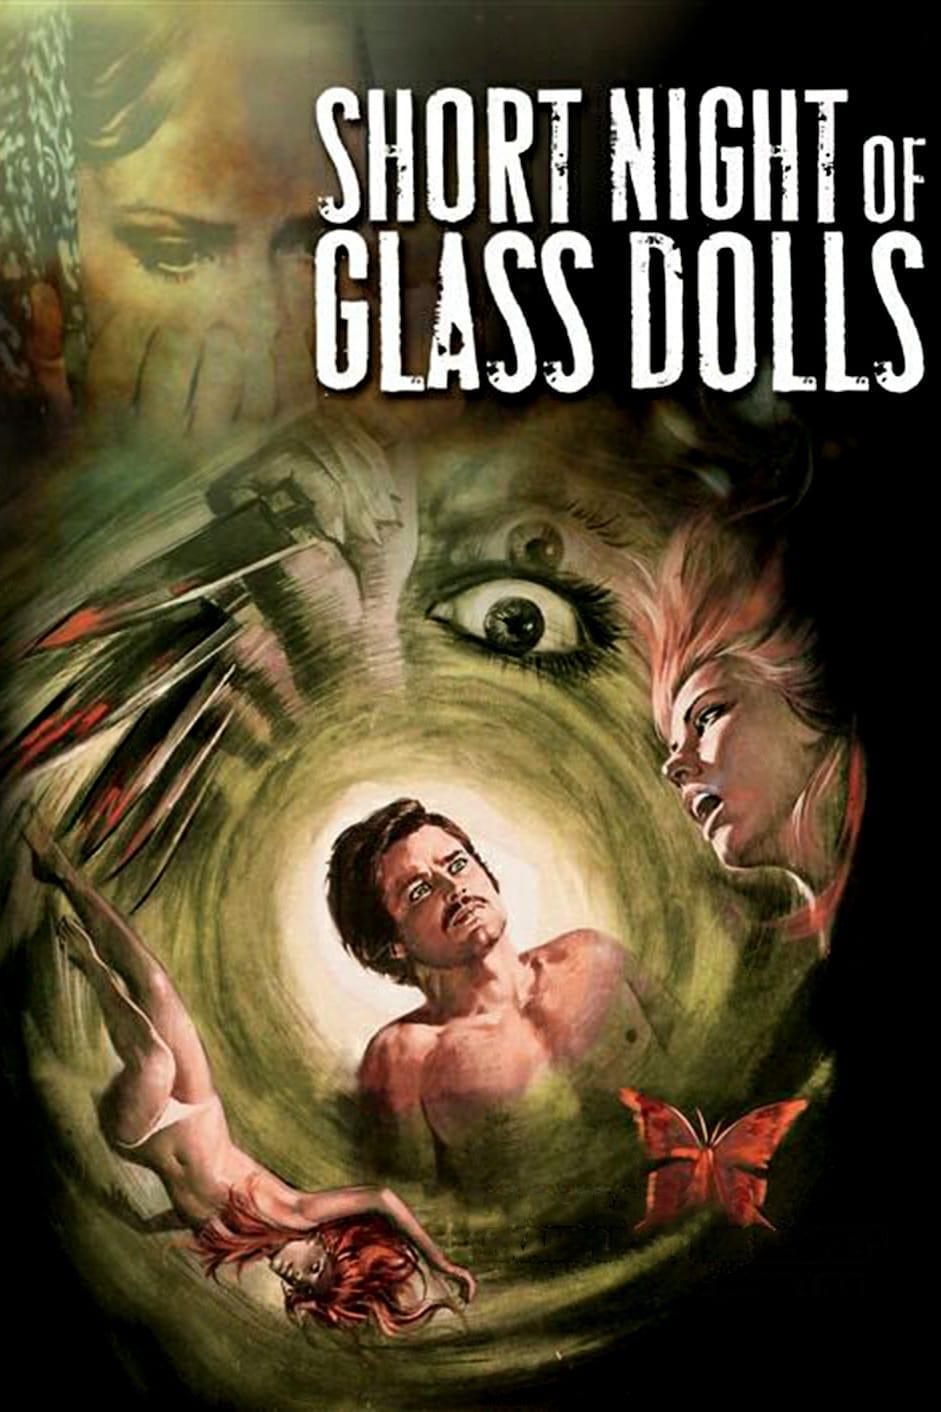 Short Night of Glass Dolls poster